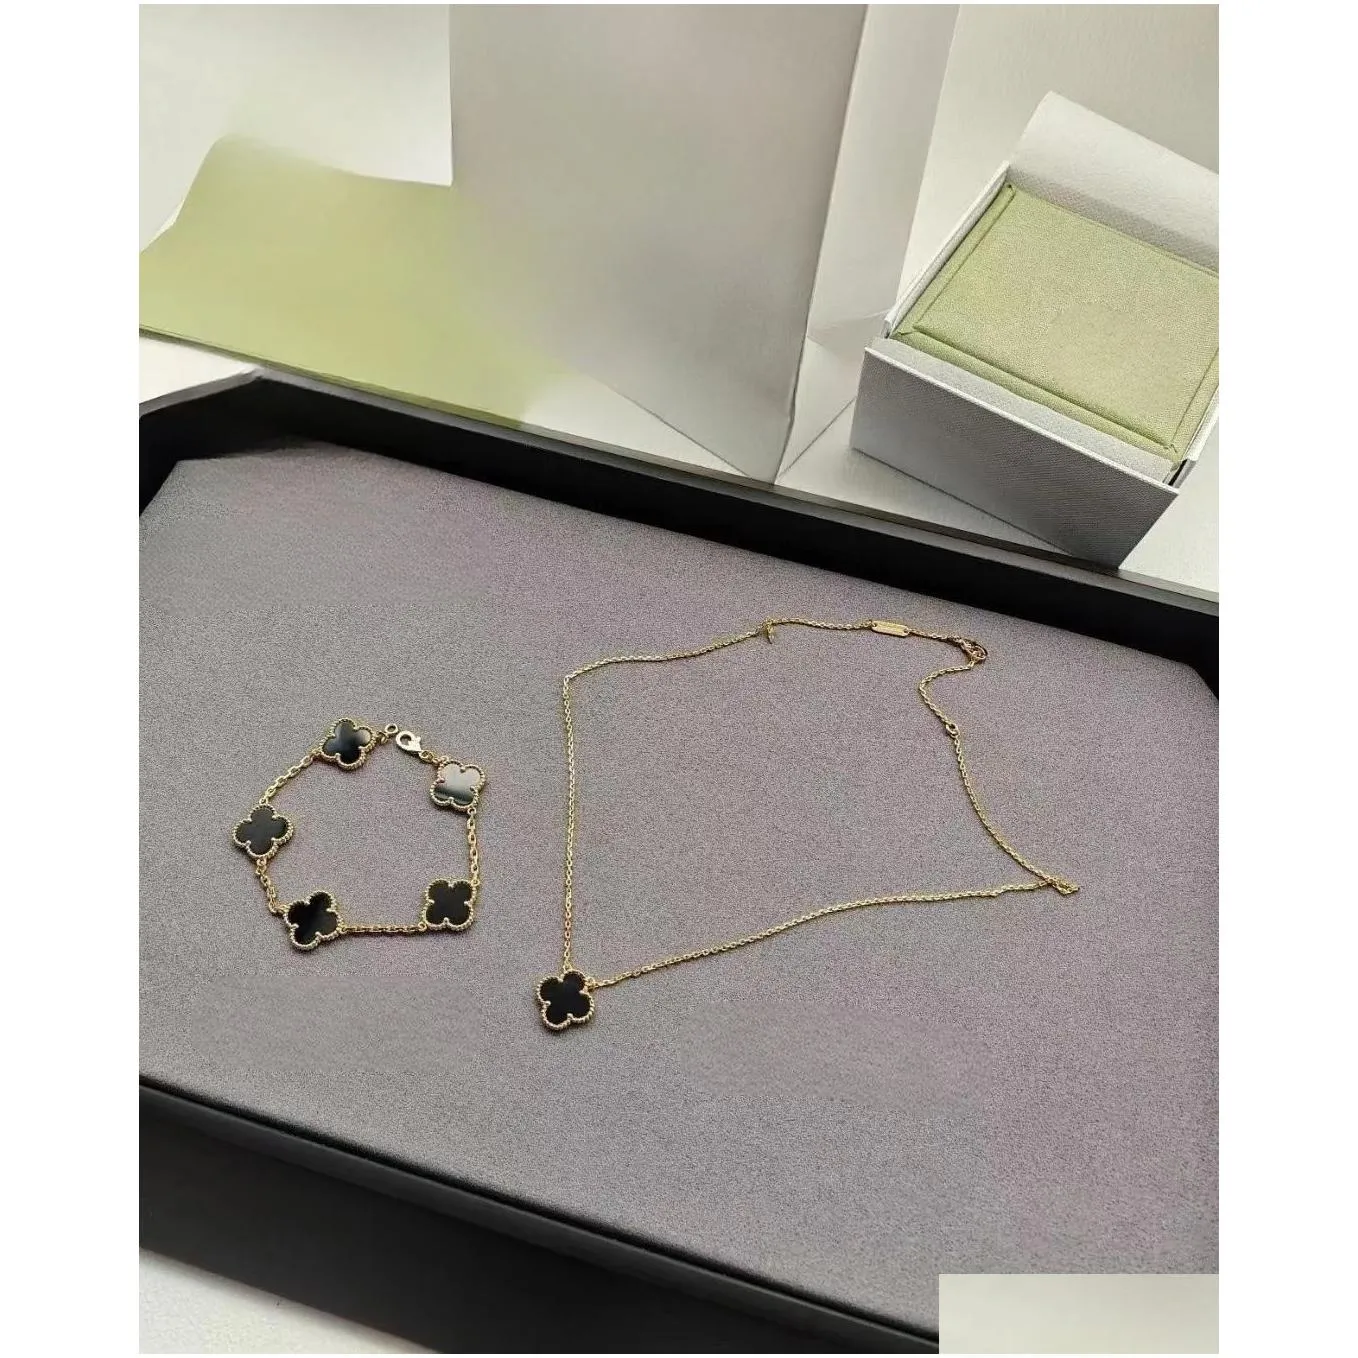 Four-leaf clover Necklace Bracelet Women`s Gold Pendant Letters Titanium Steel jewelry Girls best wedding gift Party bracelet chain Designer Jewelry 2-piece